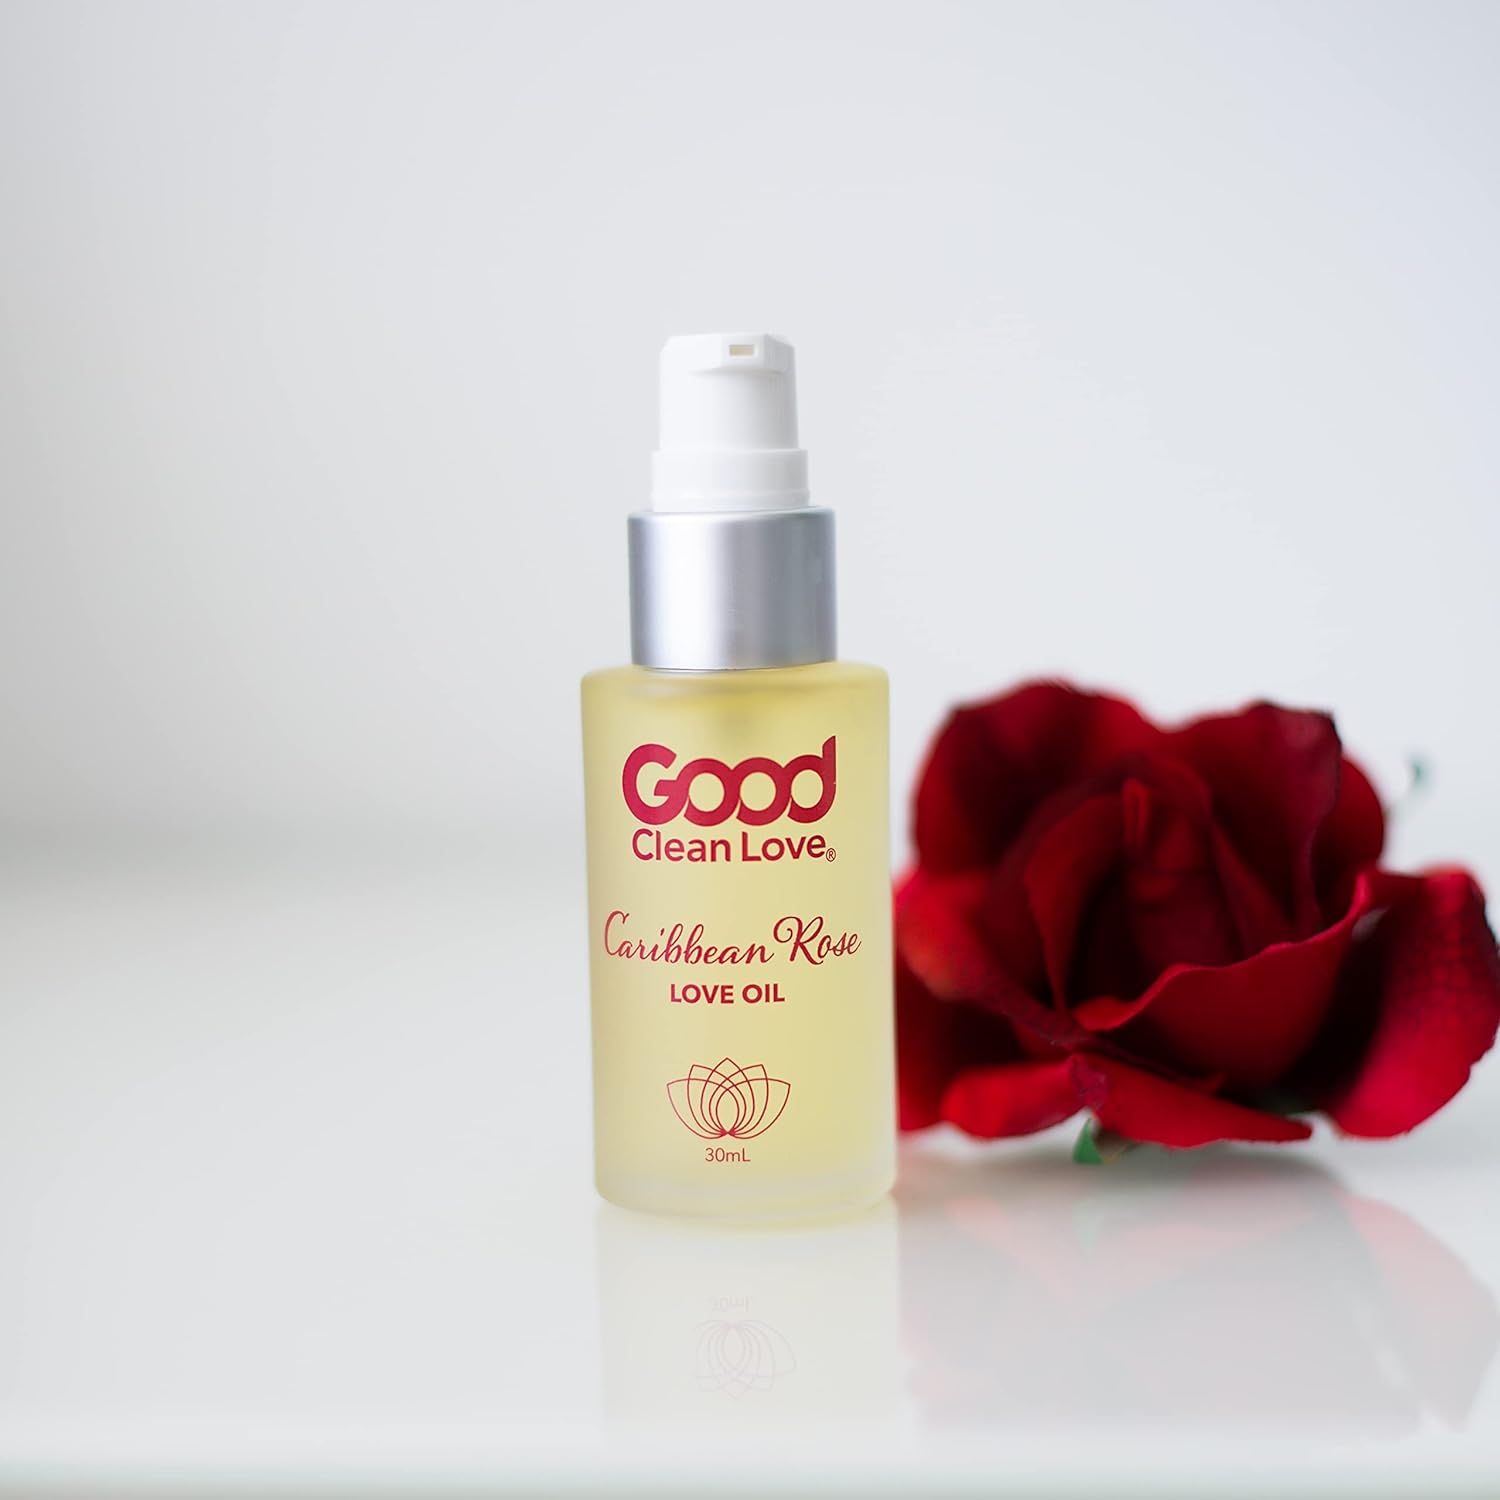 Good Clean Love Caribbean Rose Love Oil, 100% Natural Massage & Intima